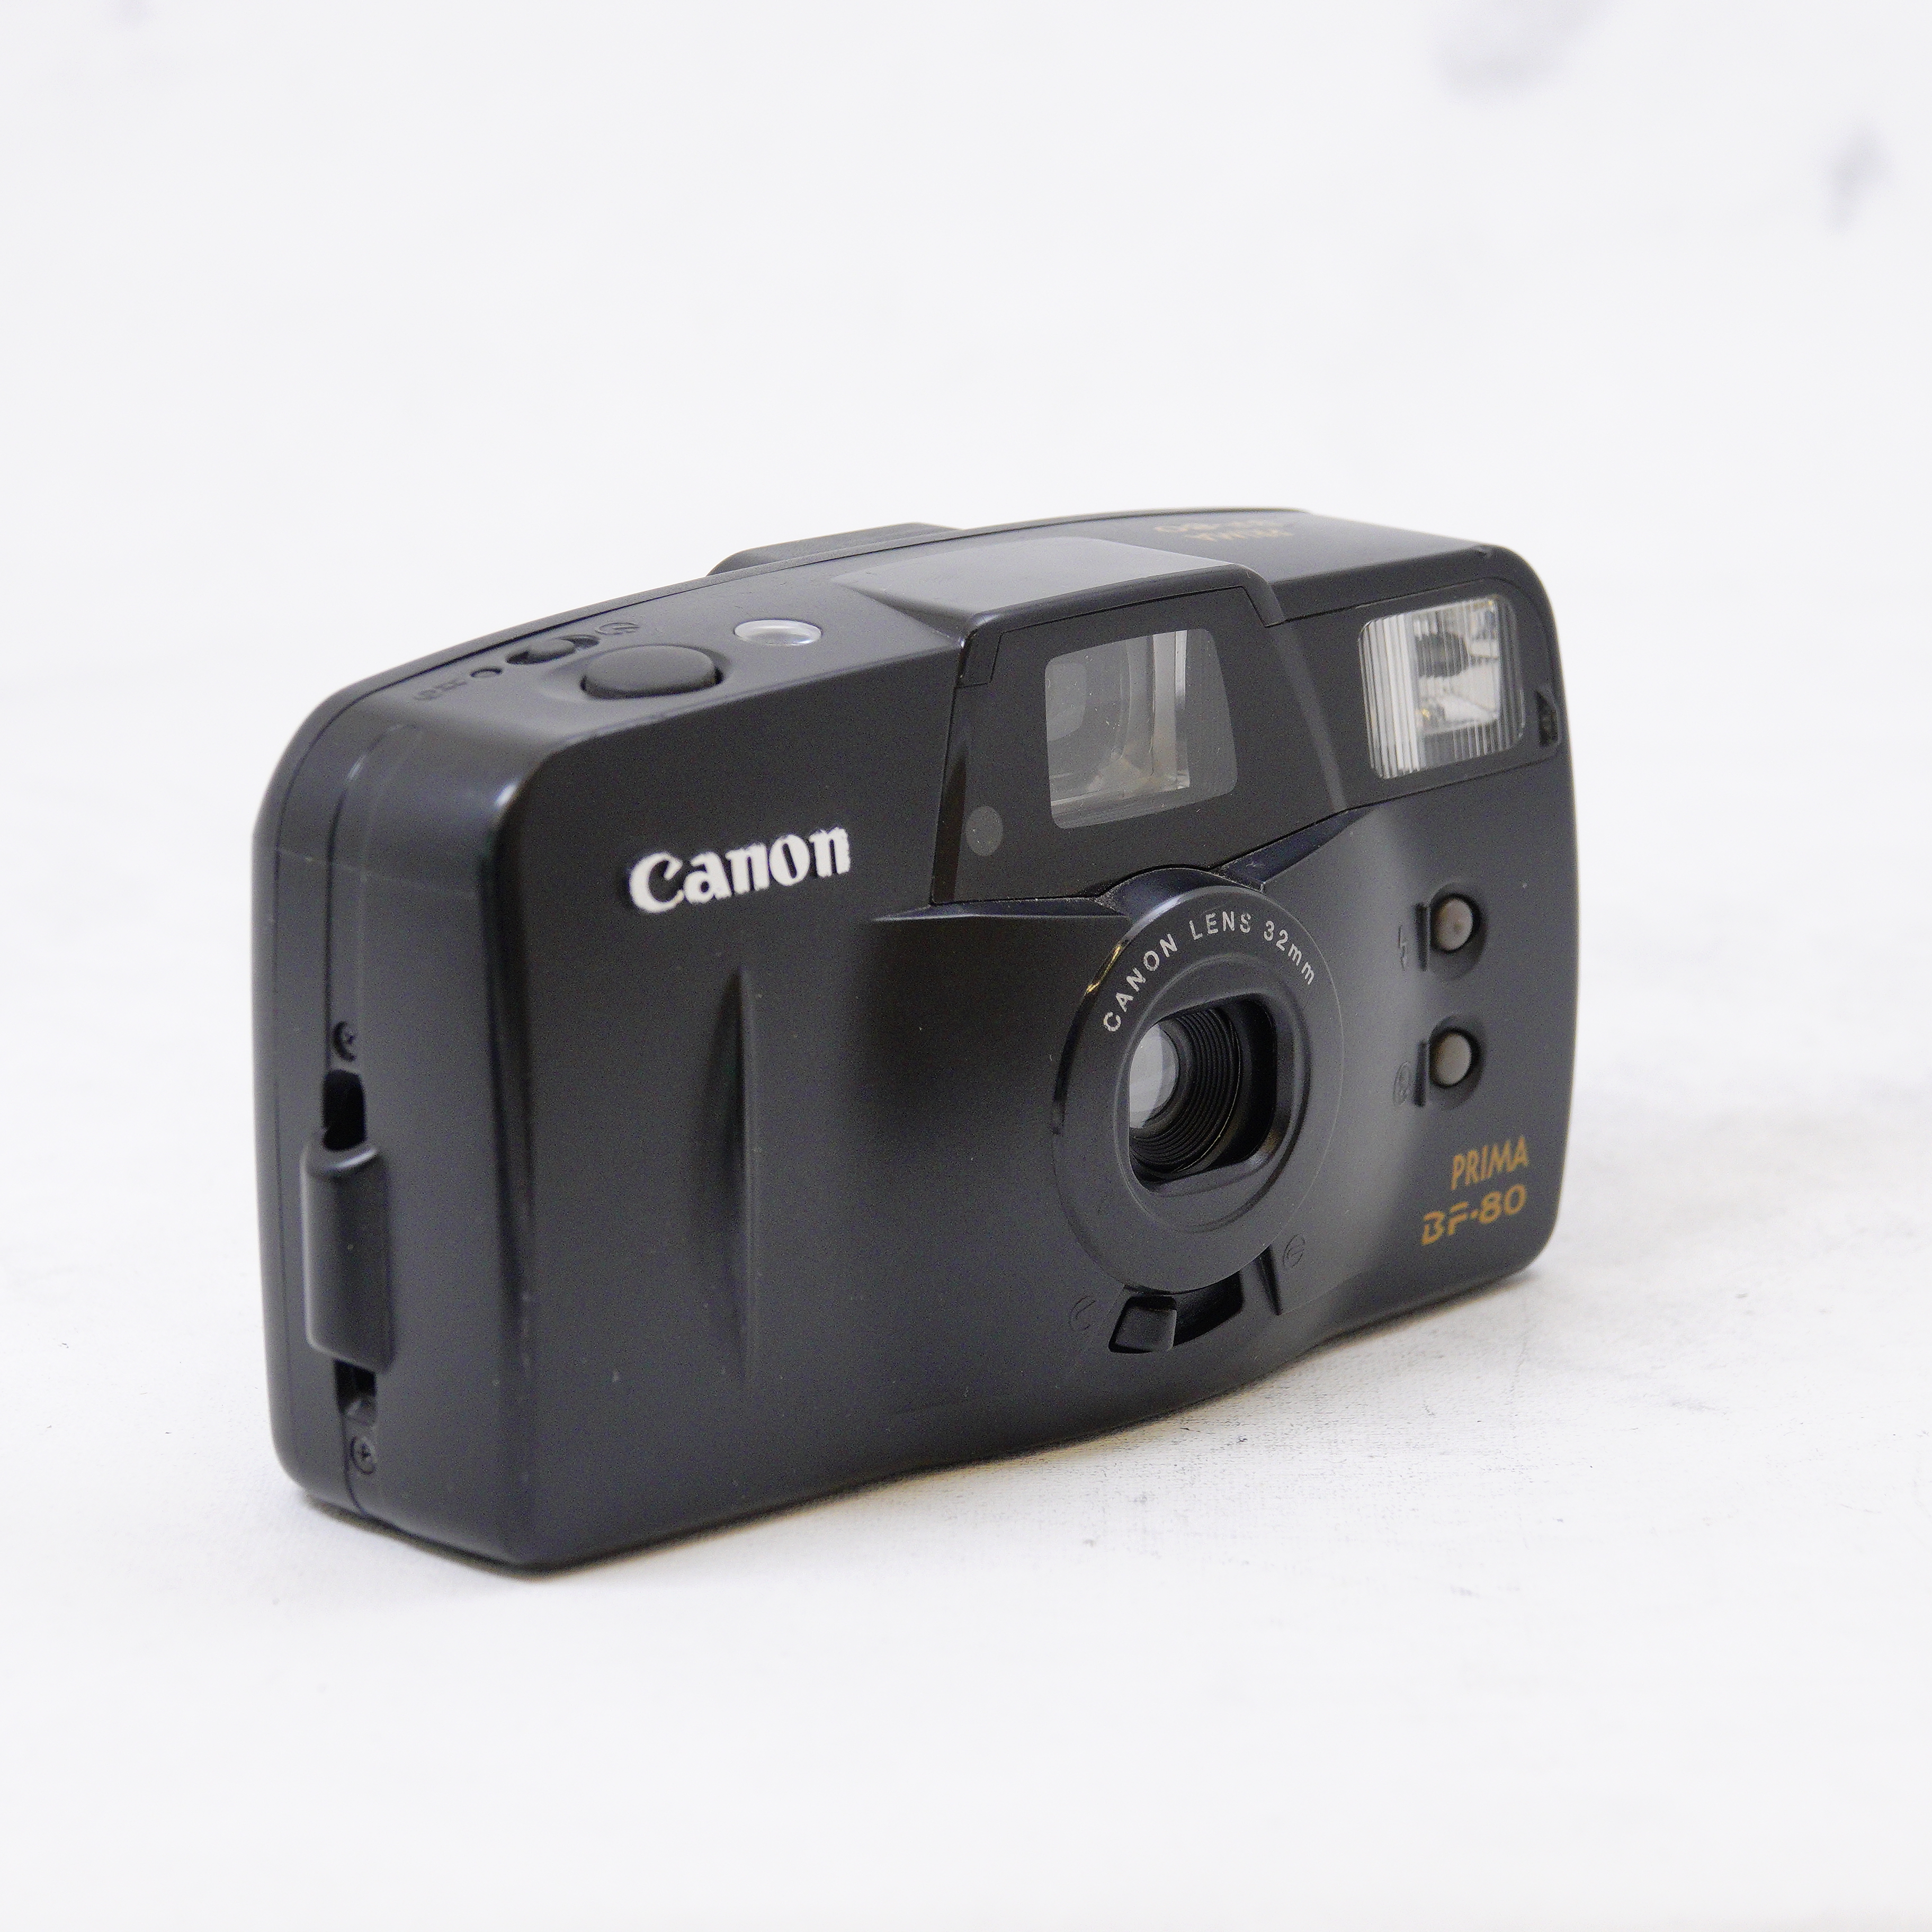 Canon Prima BF-80 - Usado 